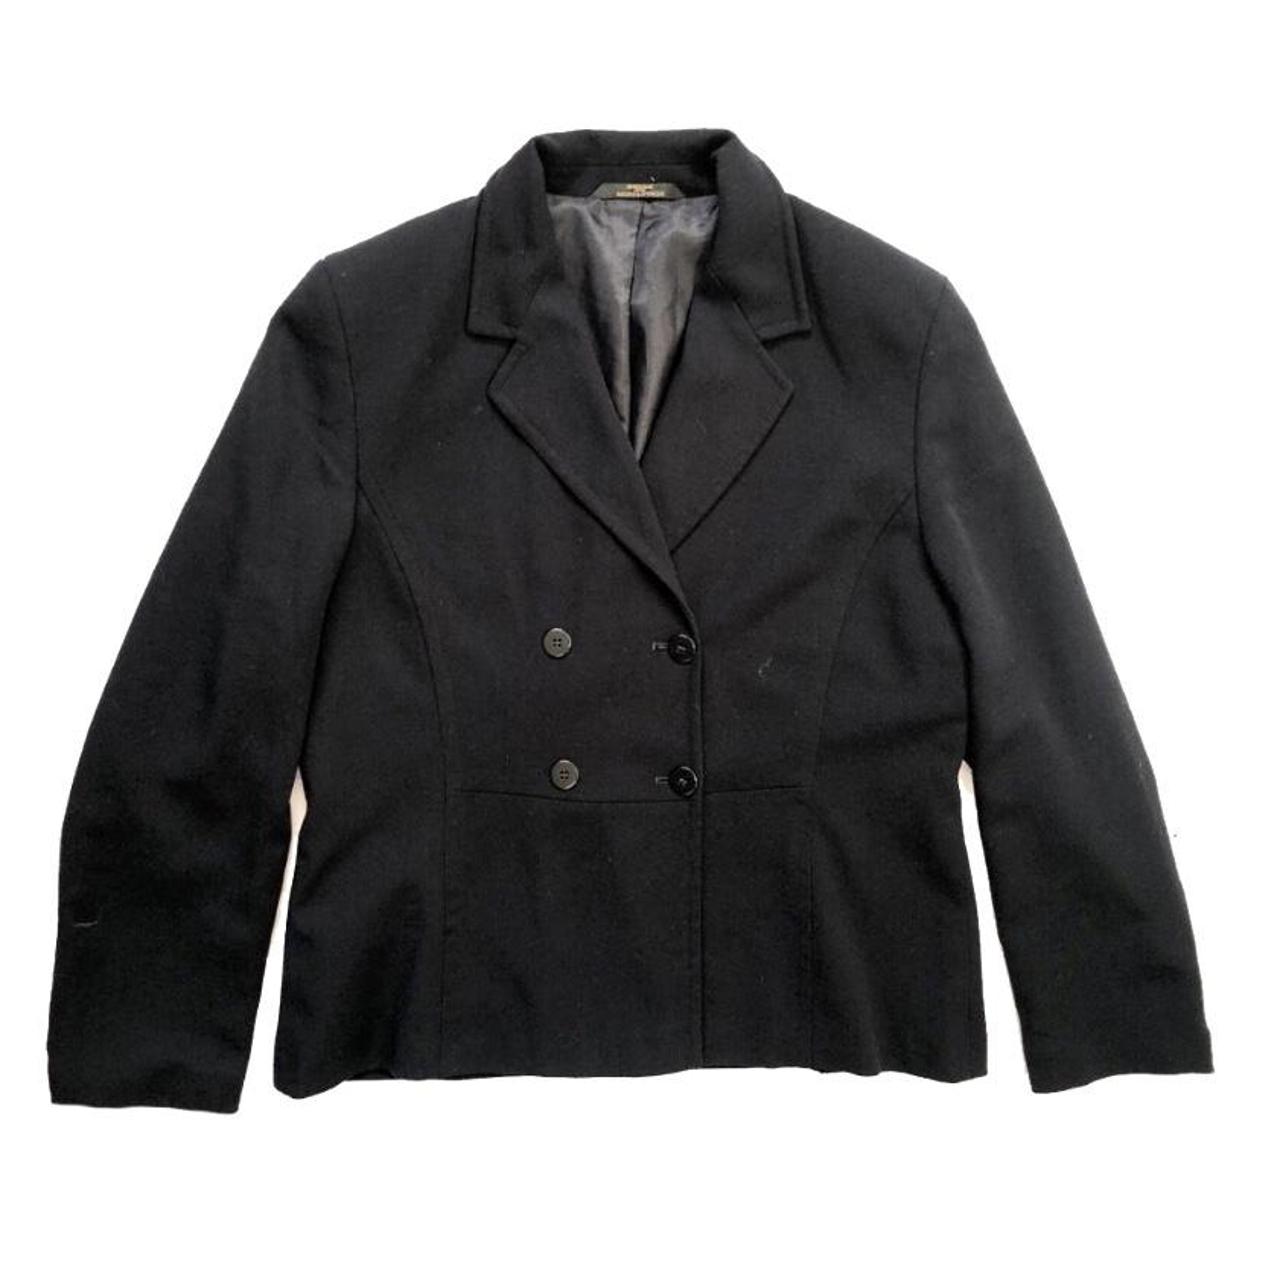 Vintage Black Blazer Jacket | Brand St Micheal |... - Depop